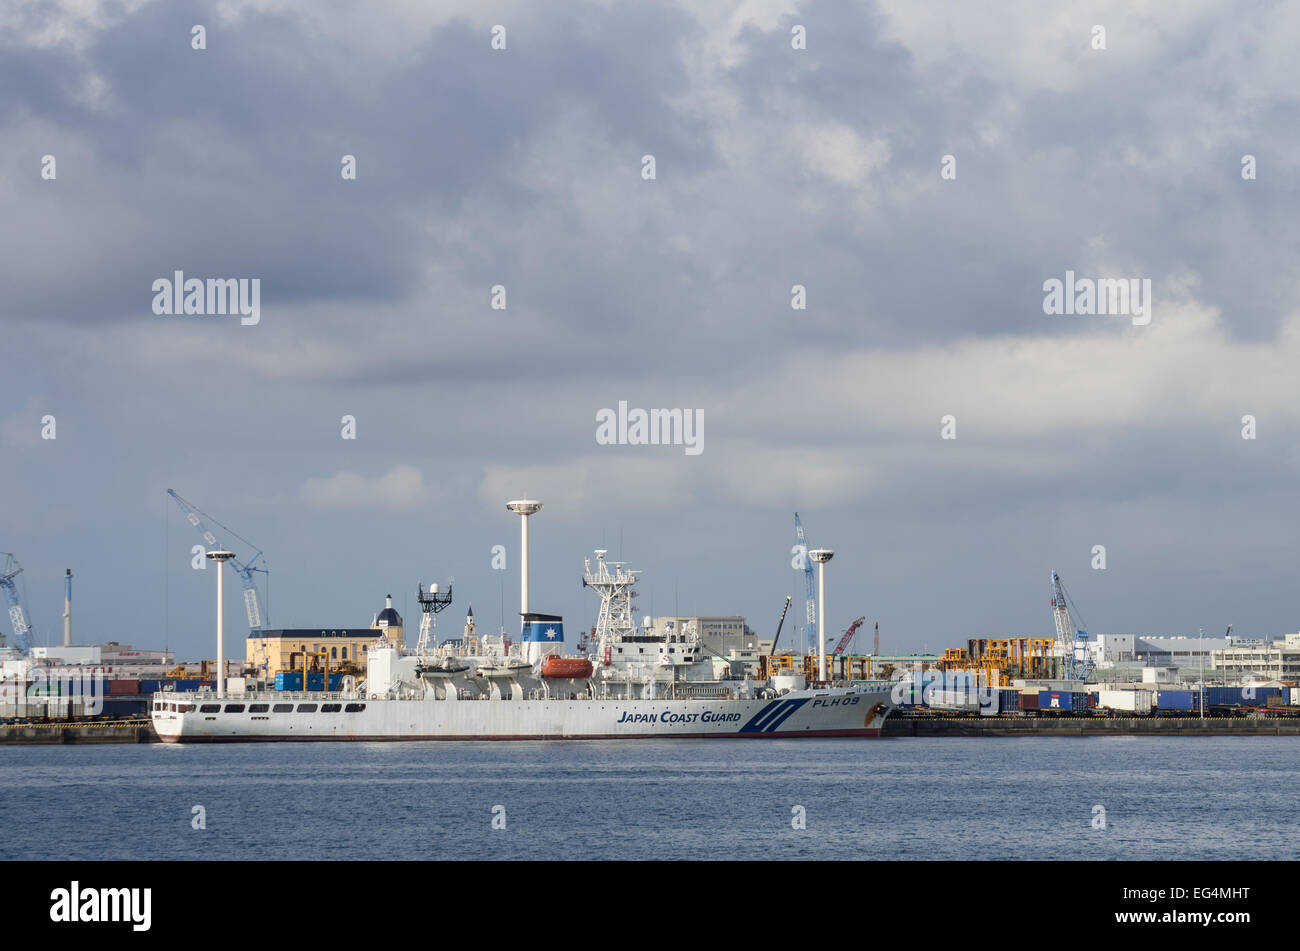 Japan Coast Guard ship 'Ryukyu' anchored at Naha Cargo Port in Okinawa, Japan Stock Photo